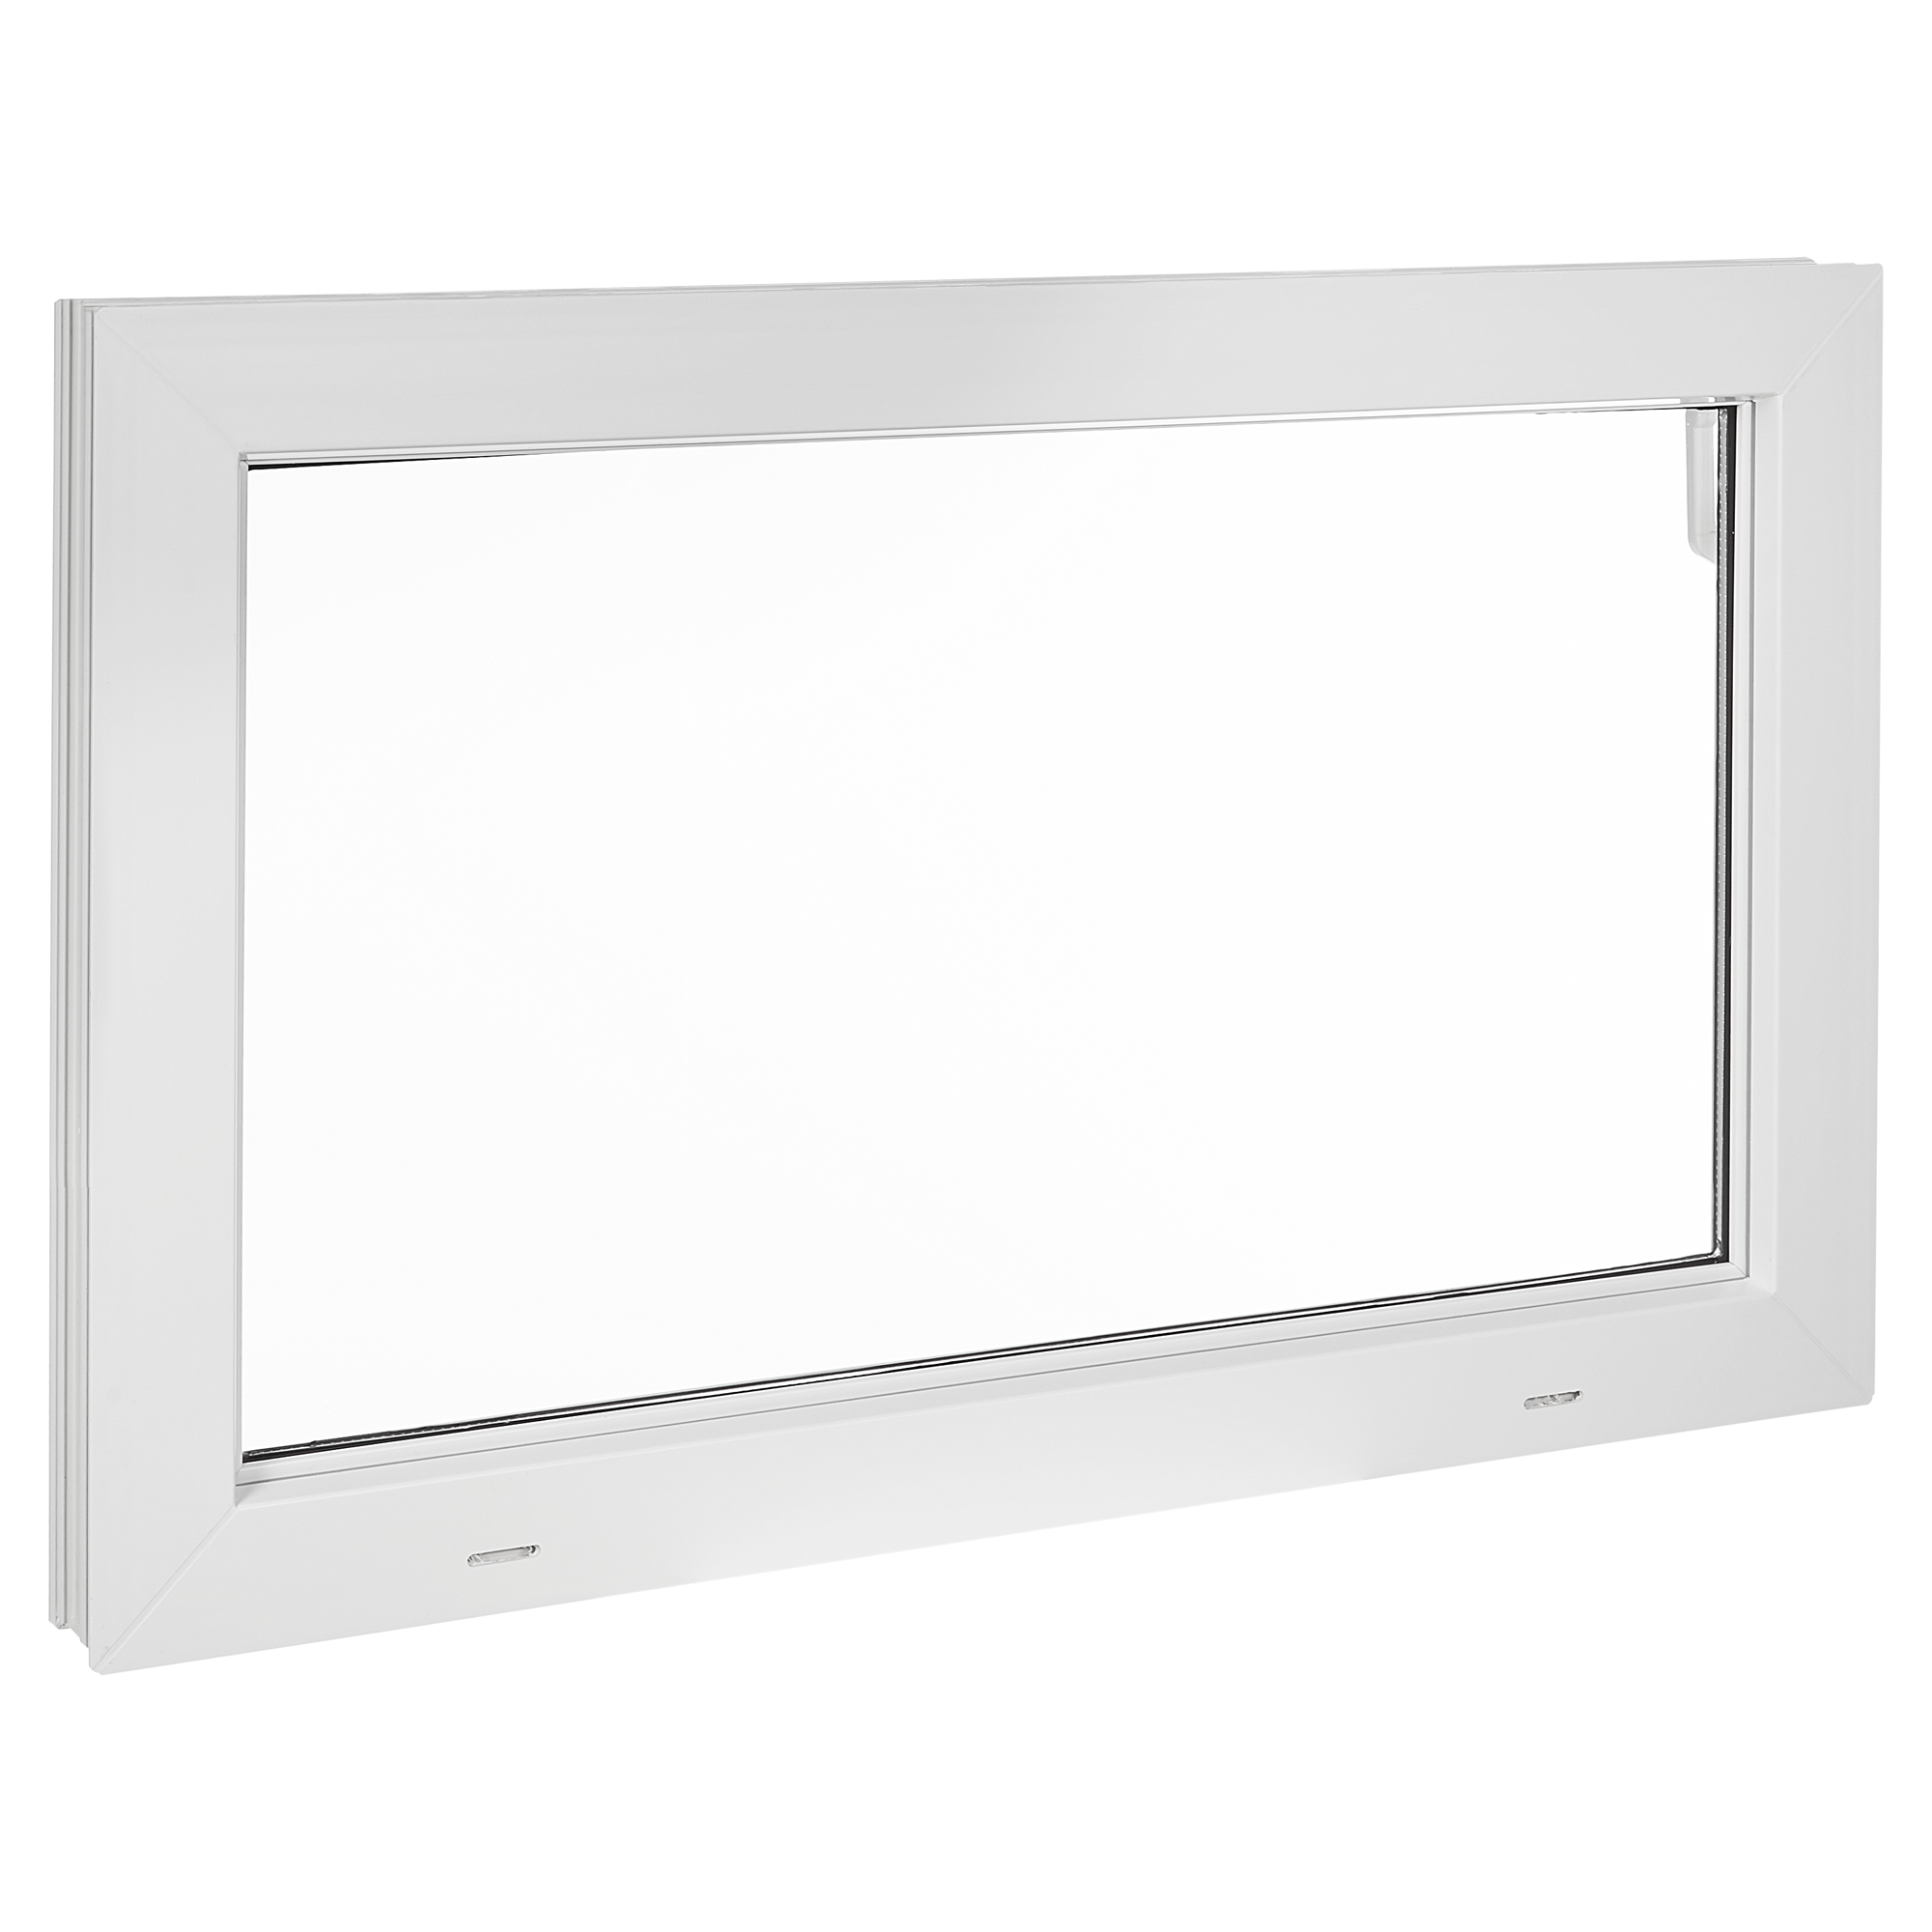 Kippfenster weiß 1-flügelig 80 x 50 cm + product picture